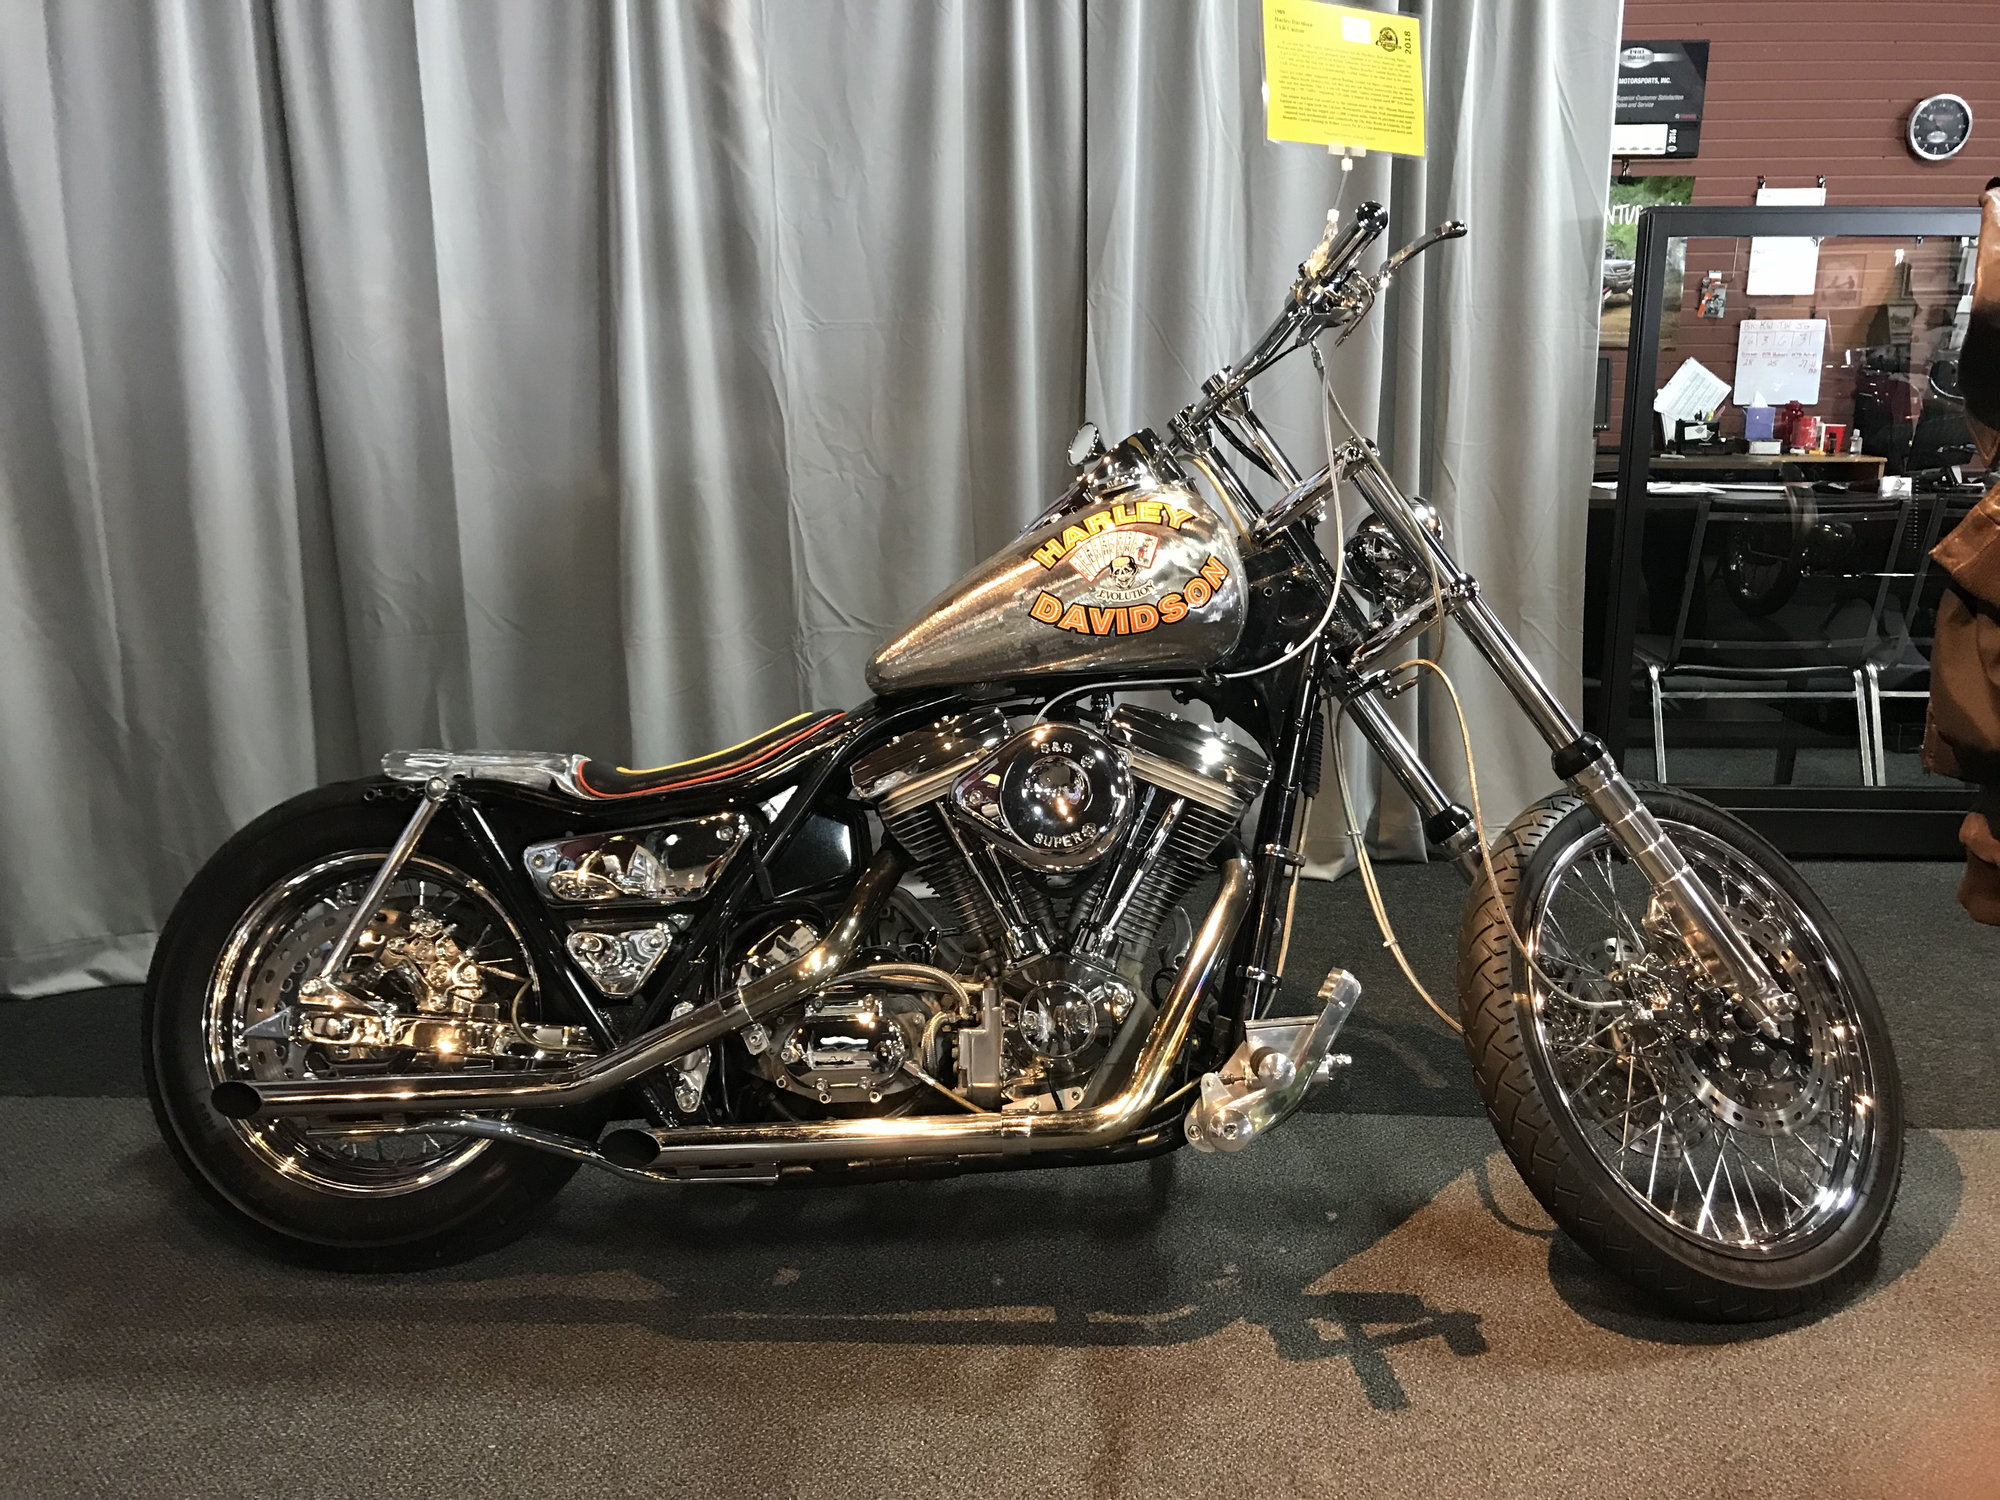 Harley Davidson Marlboro Man Bike For Sale Off 69 Medpharmres Com